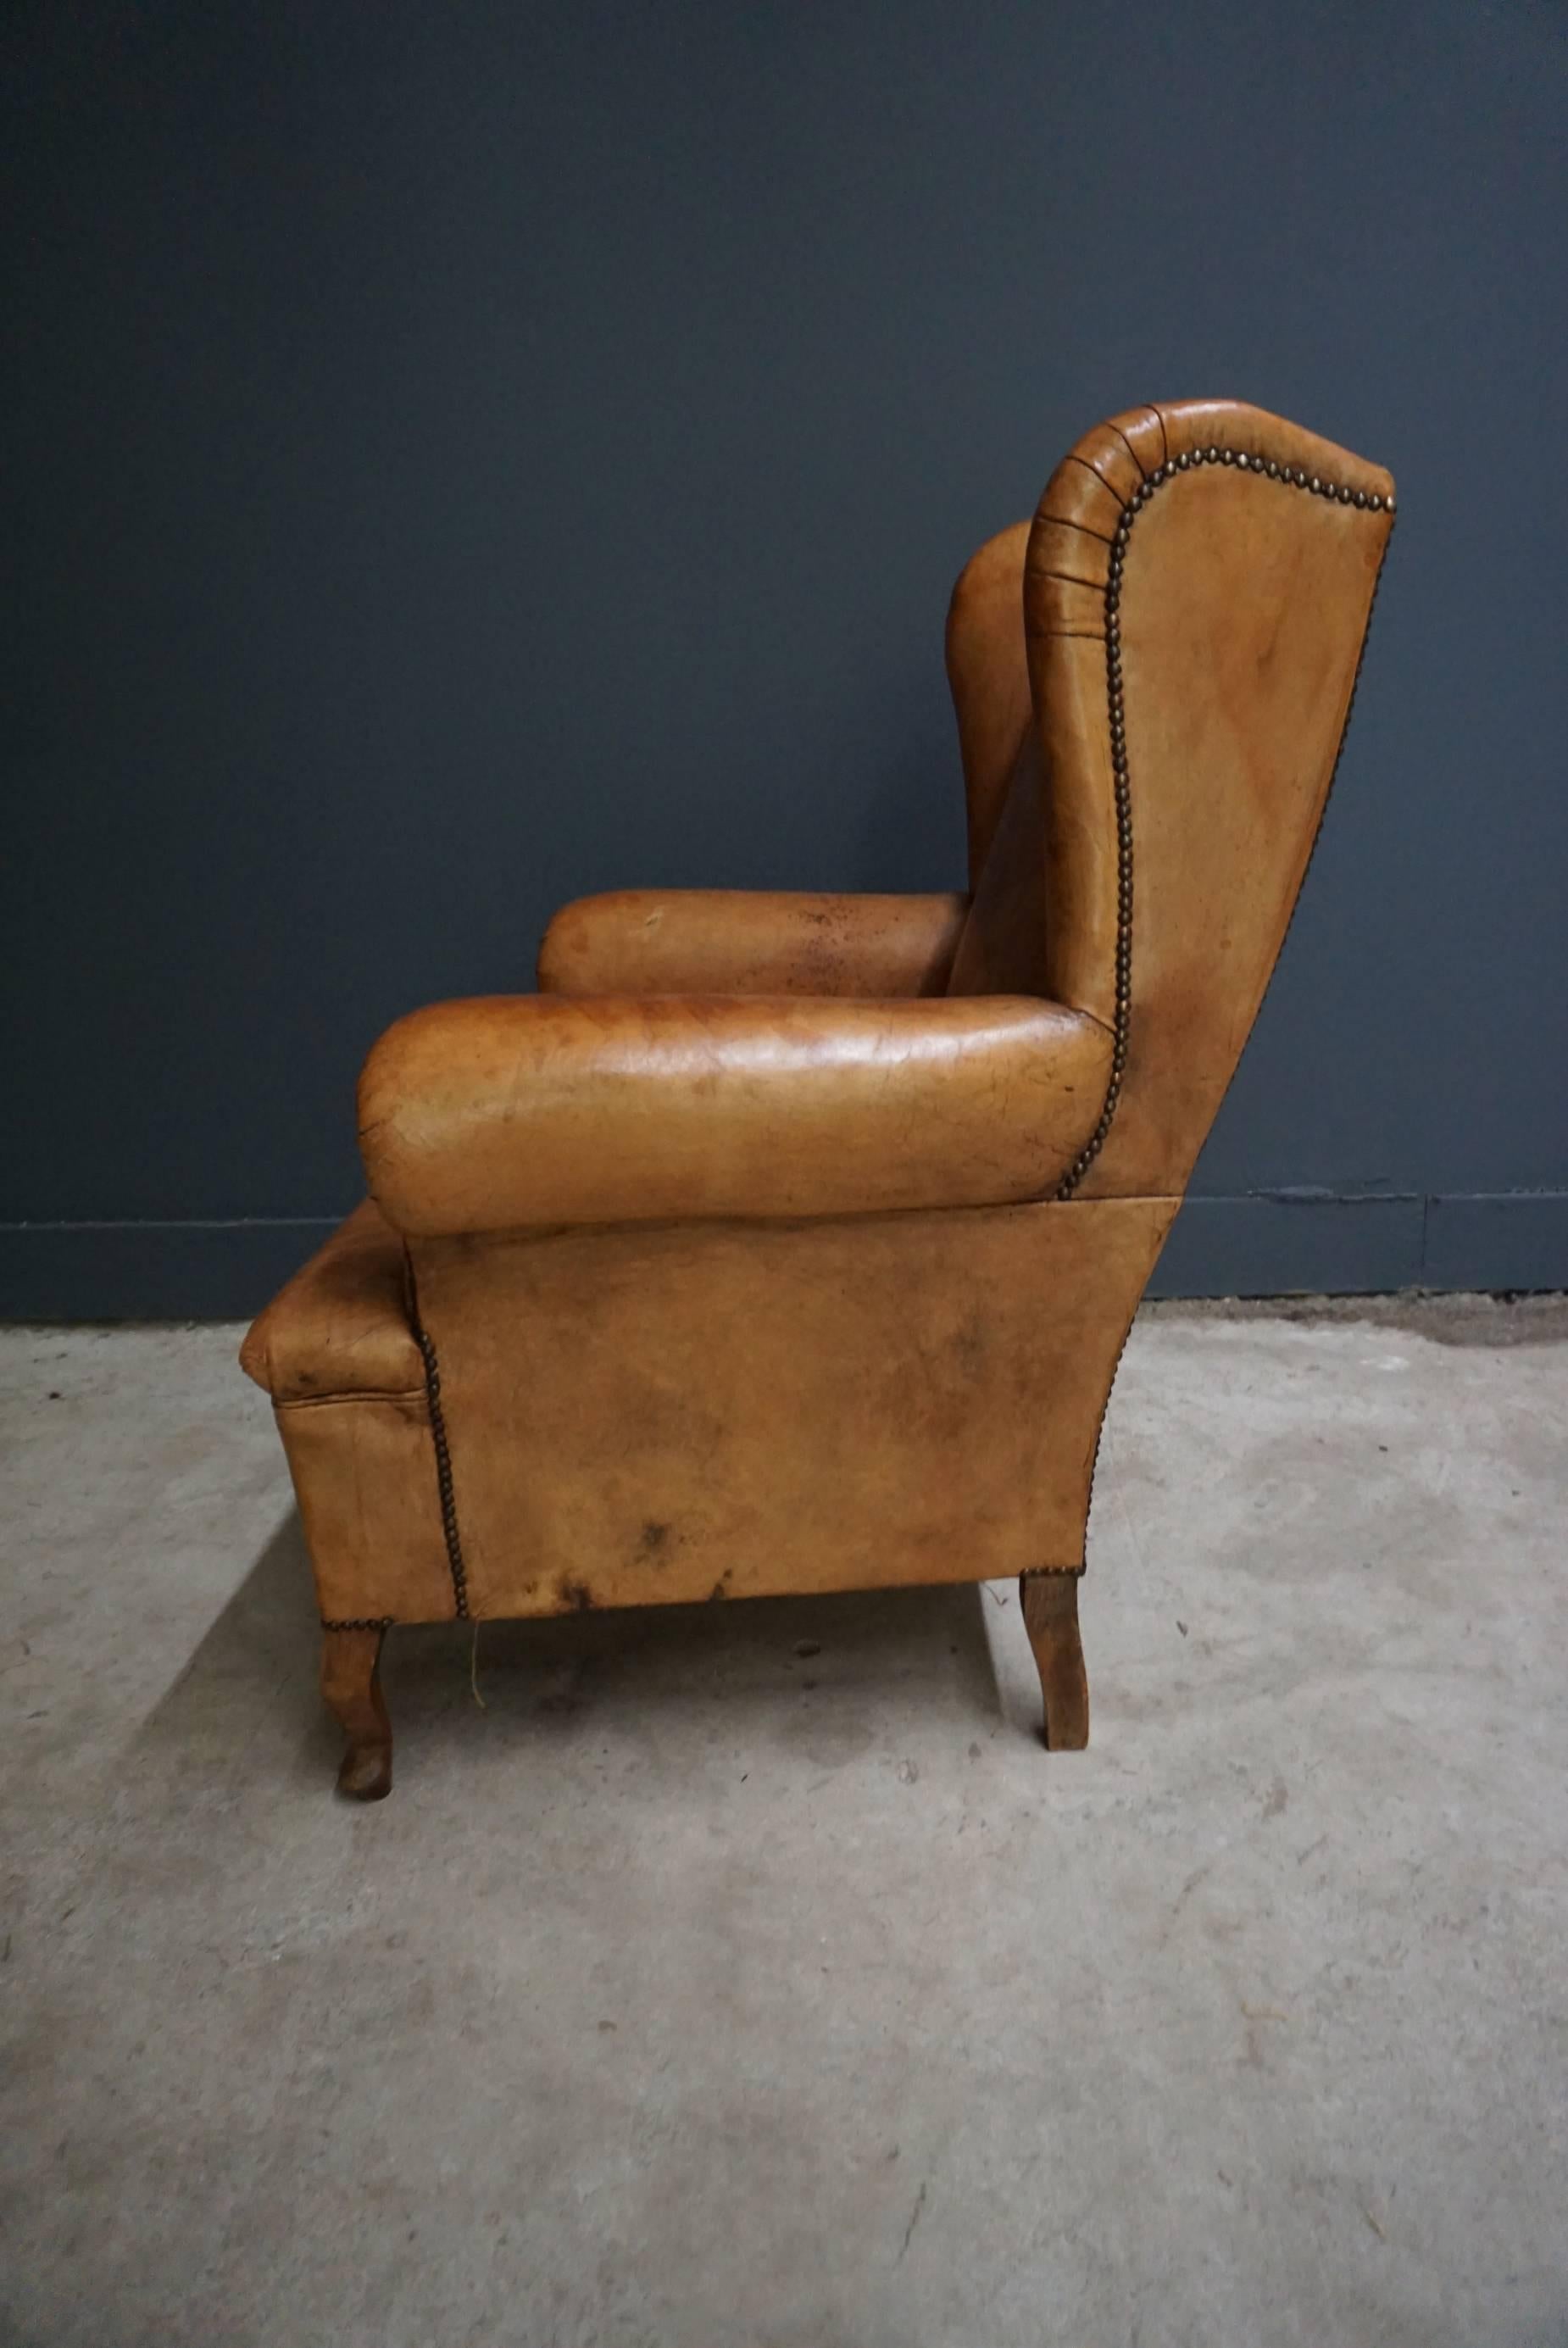 20th Century Dutch Antique Cognac-Colored Leather Club Chair